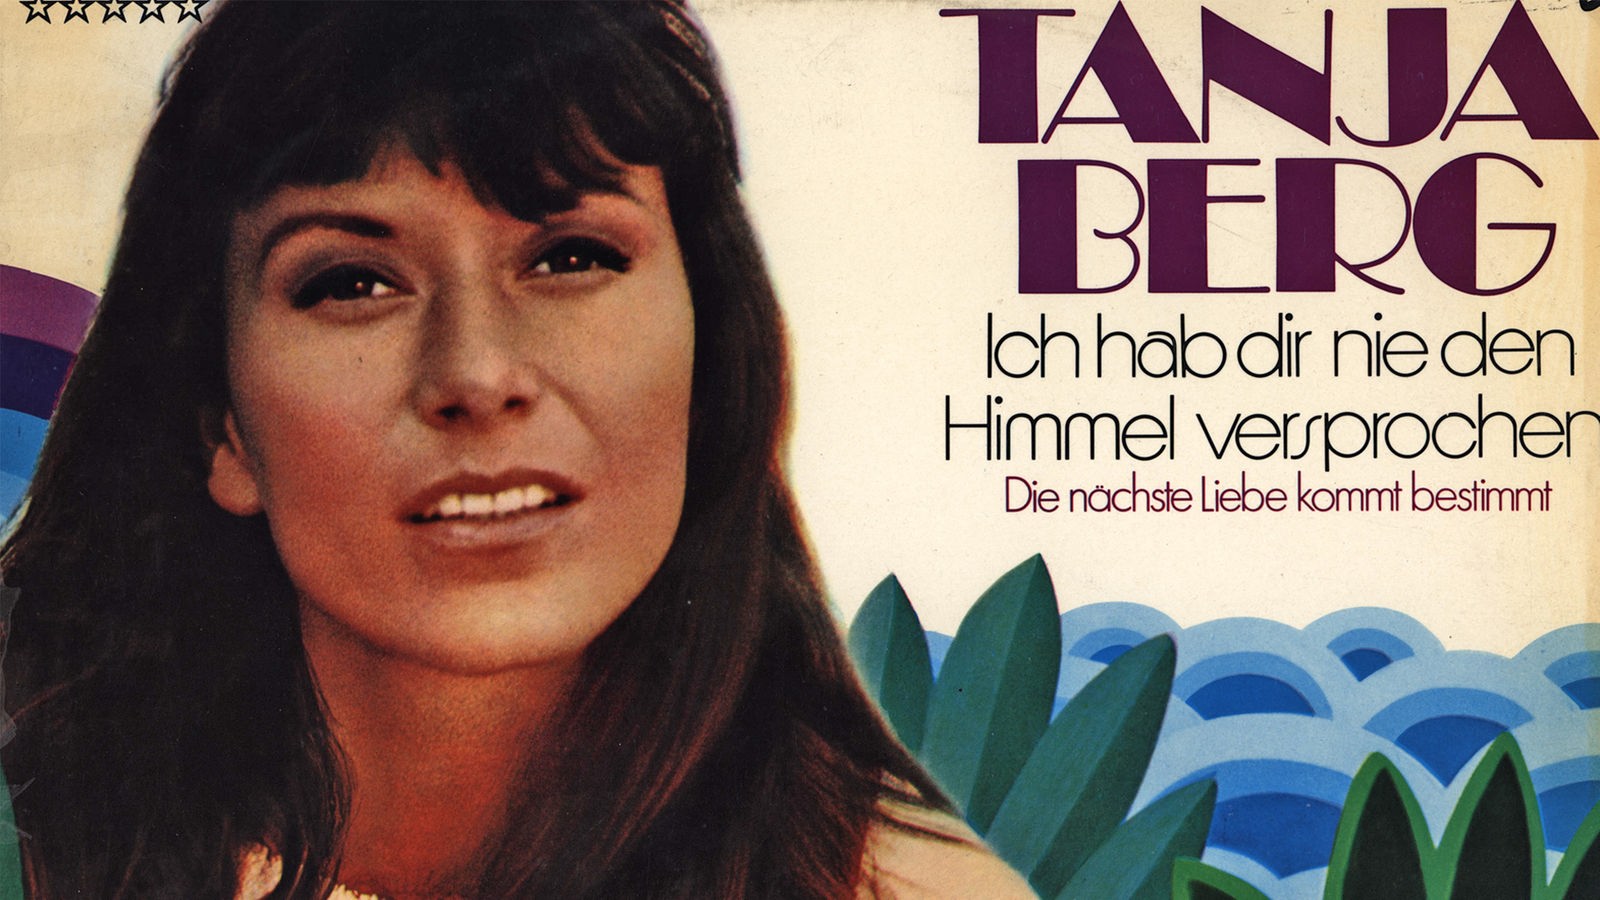 Schallplattenbar: Tanja Berg (1972) - Schallplattenbar - Musik - Kultur - ...